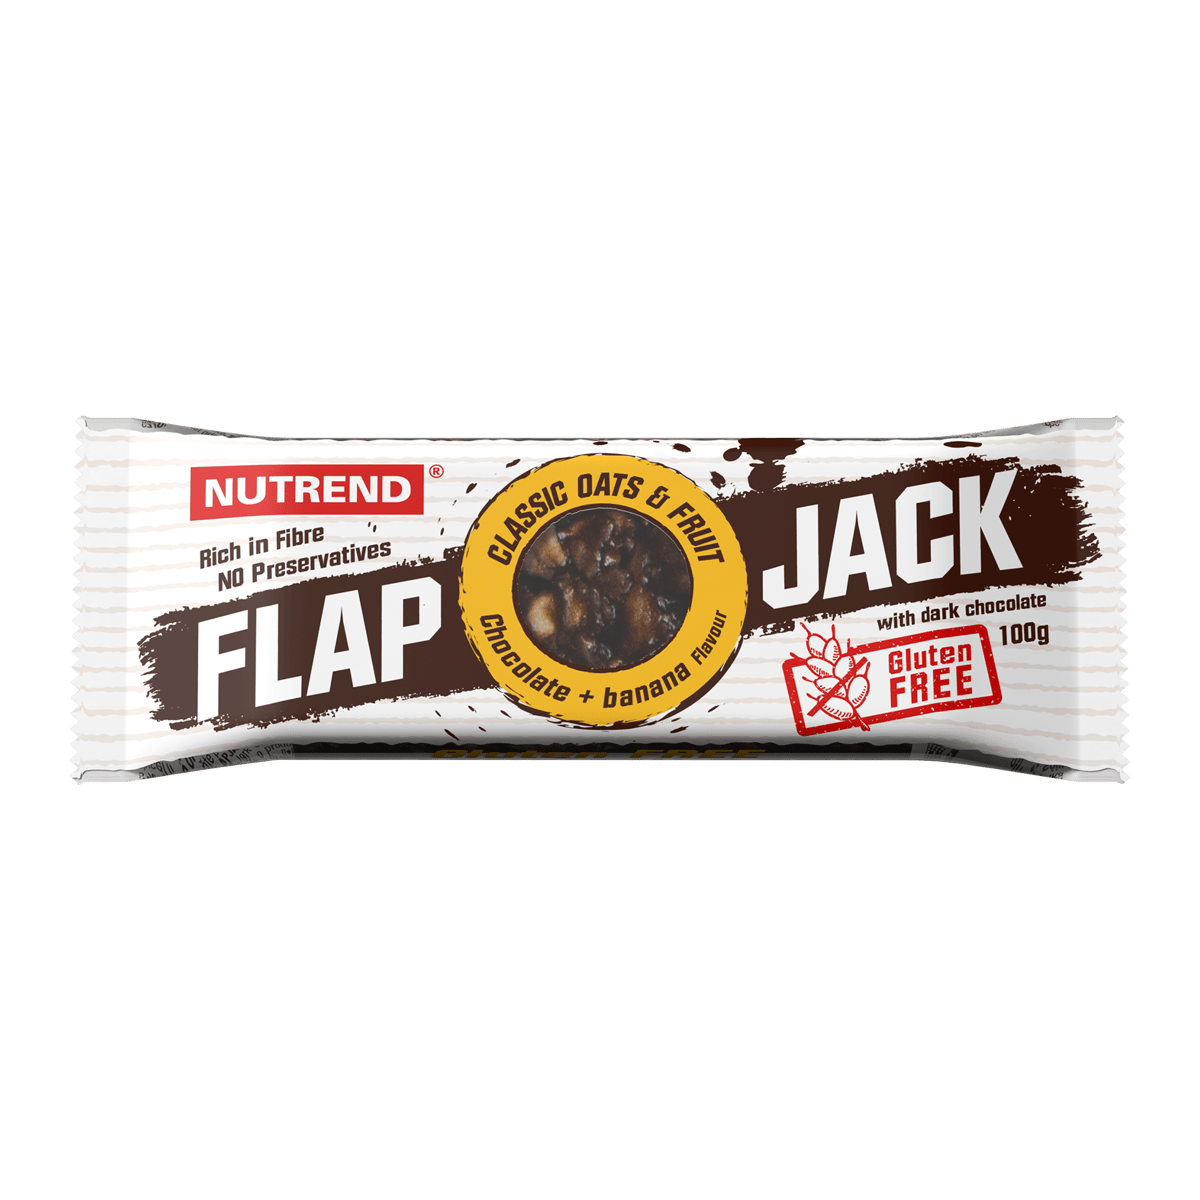 Flapjack Gluten Free #0